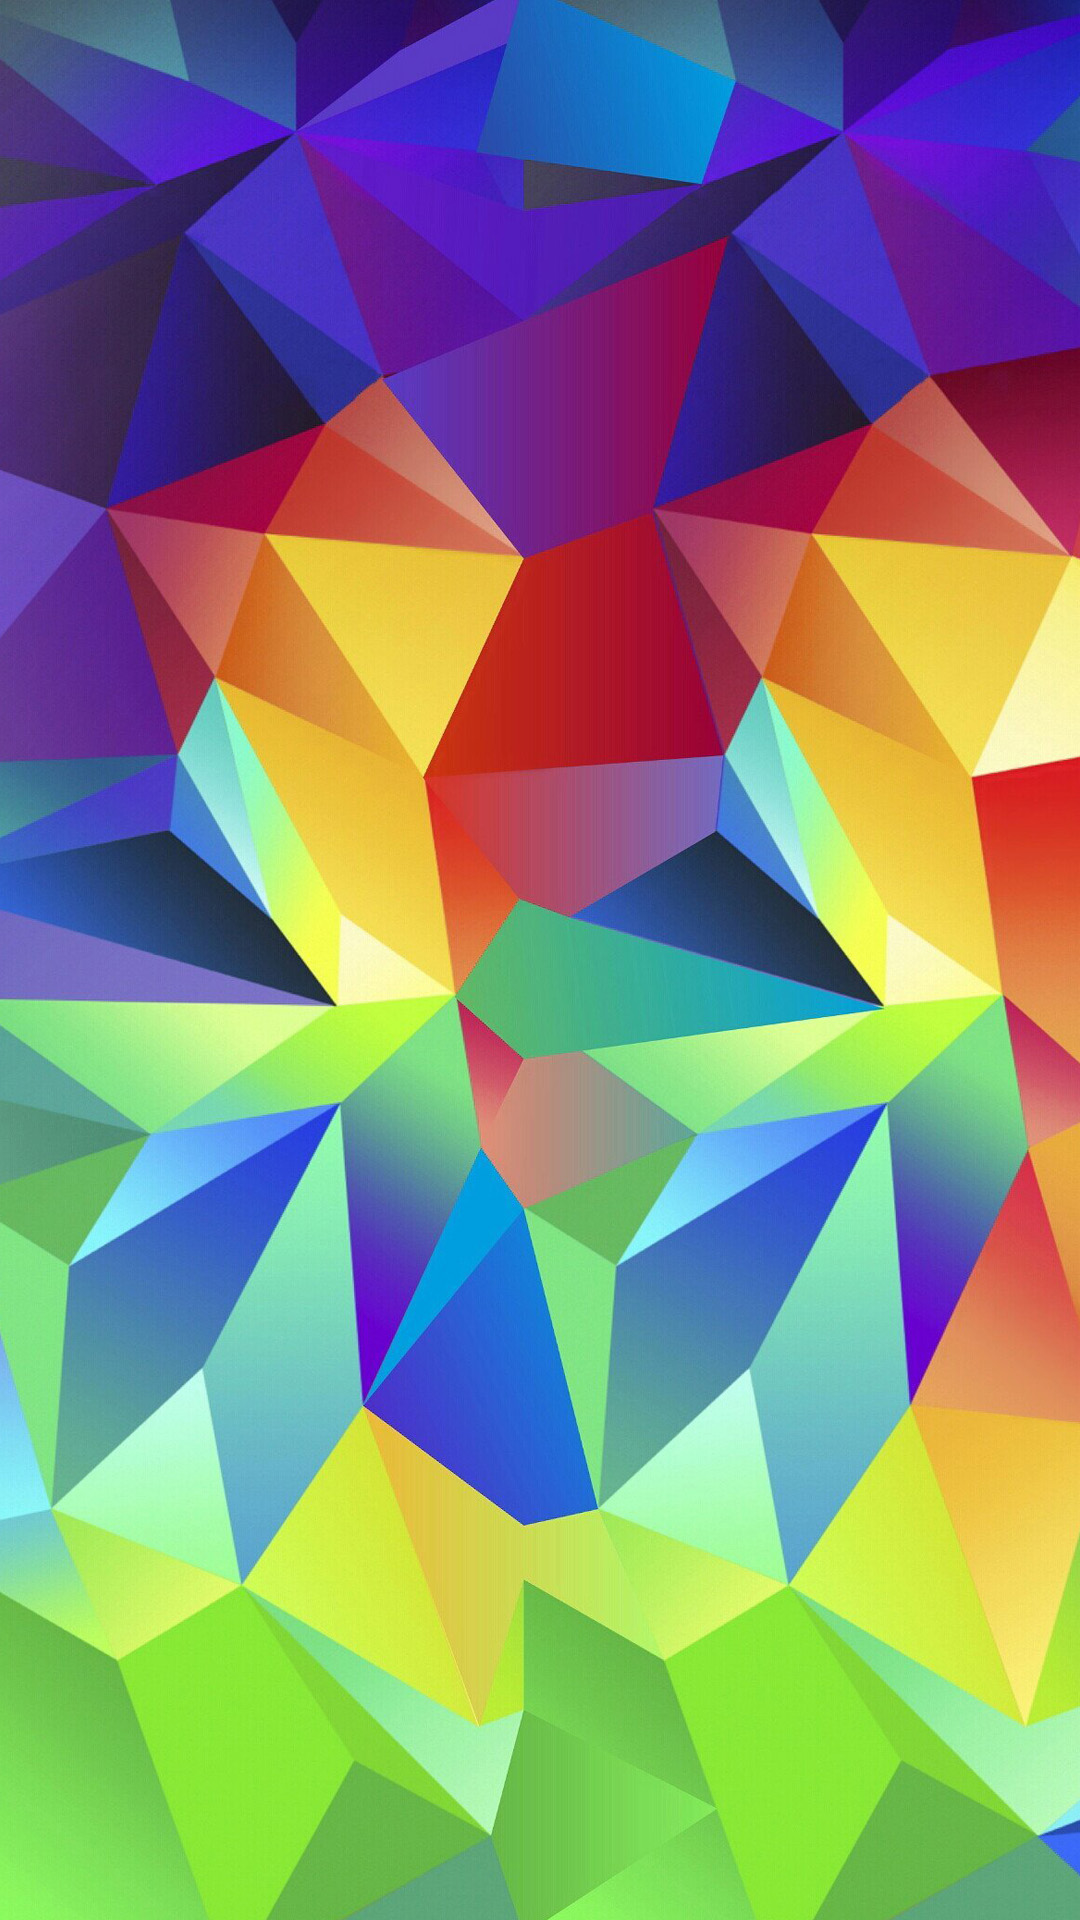 samsung galaxy s5 wallpaper hd,pattern,symmetry,design,triangle,colorfulness